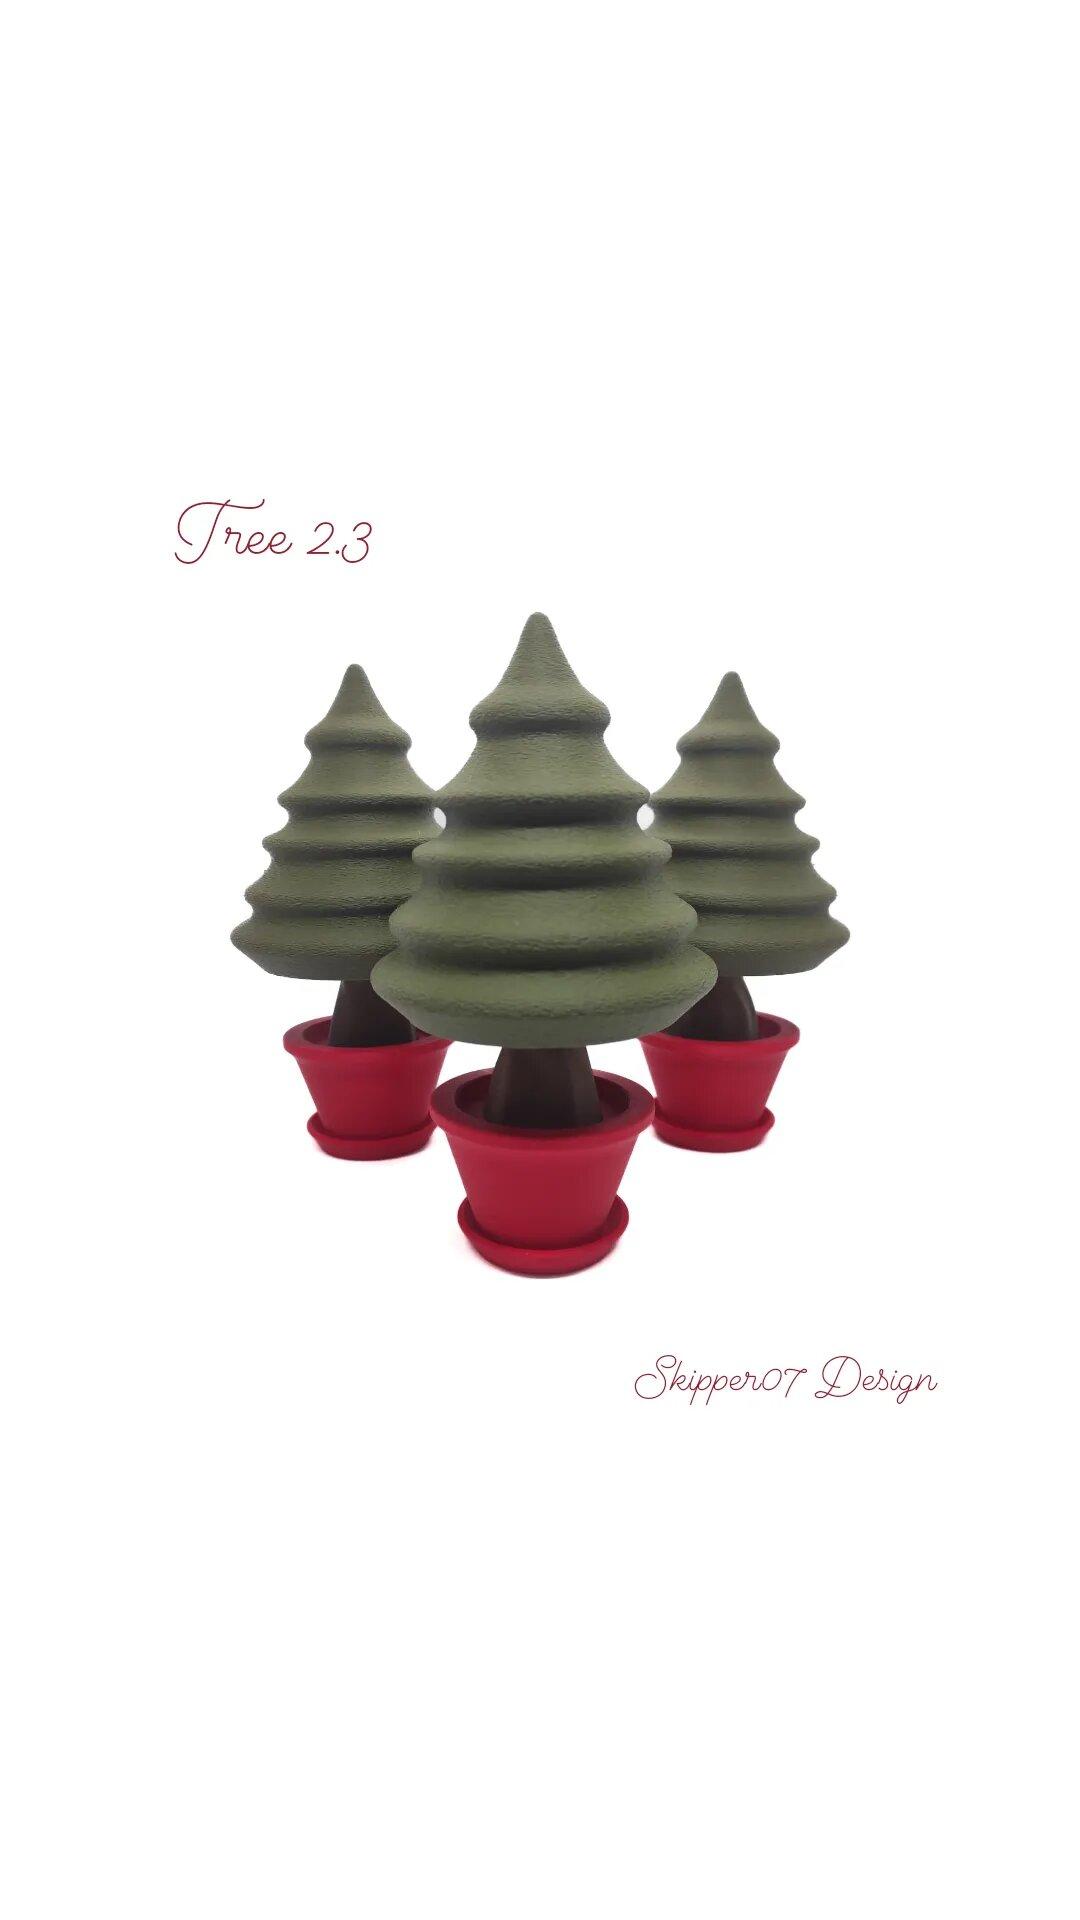 Tree 2.3 3d model